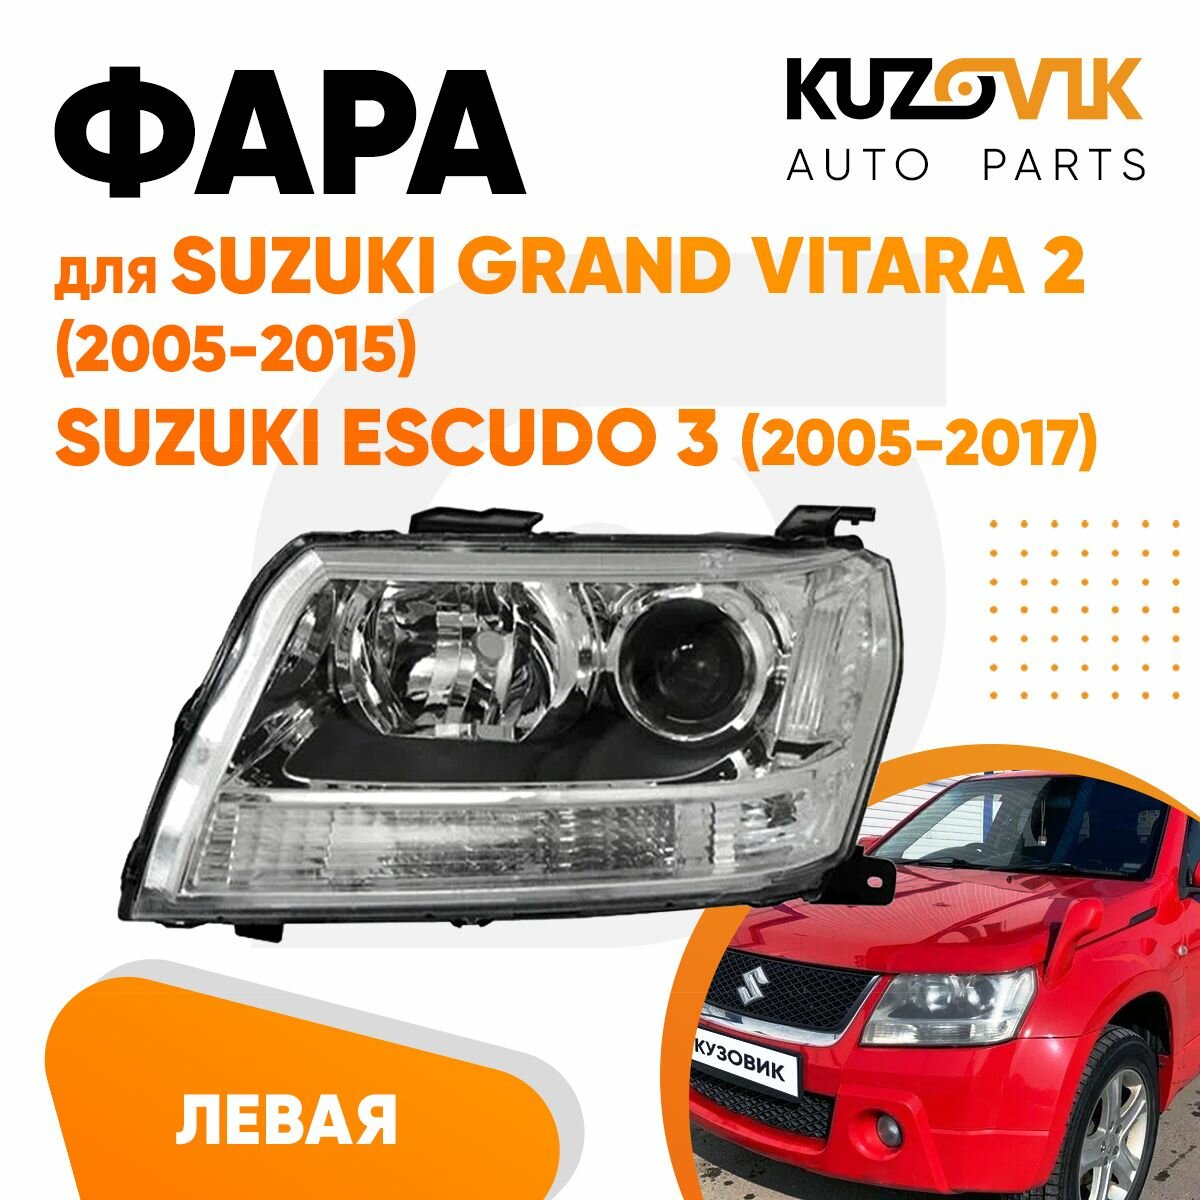 Фара левая для Сузуки Гранд Витара Suzuki Grand Vitara 2 (2005-2015) / Сузуки Эскудо Suzuki Escudo 3 (2005-2017) галоген, электрический корректор